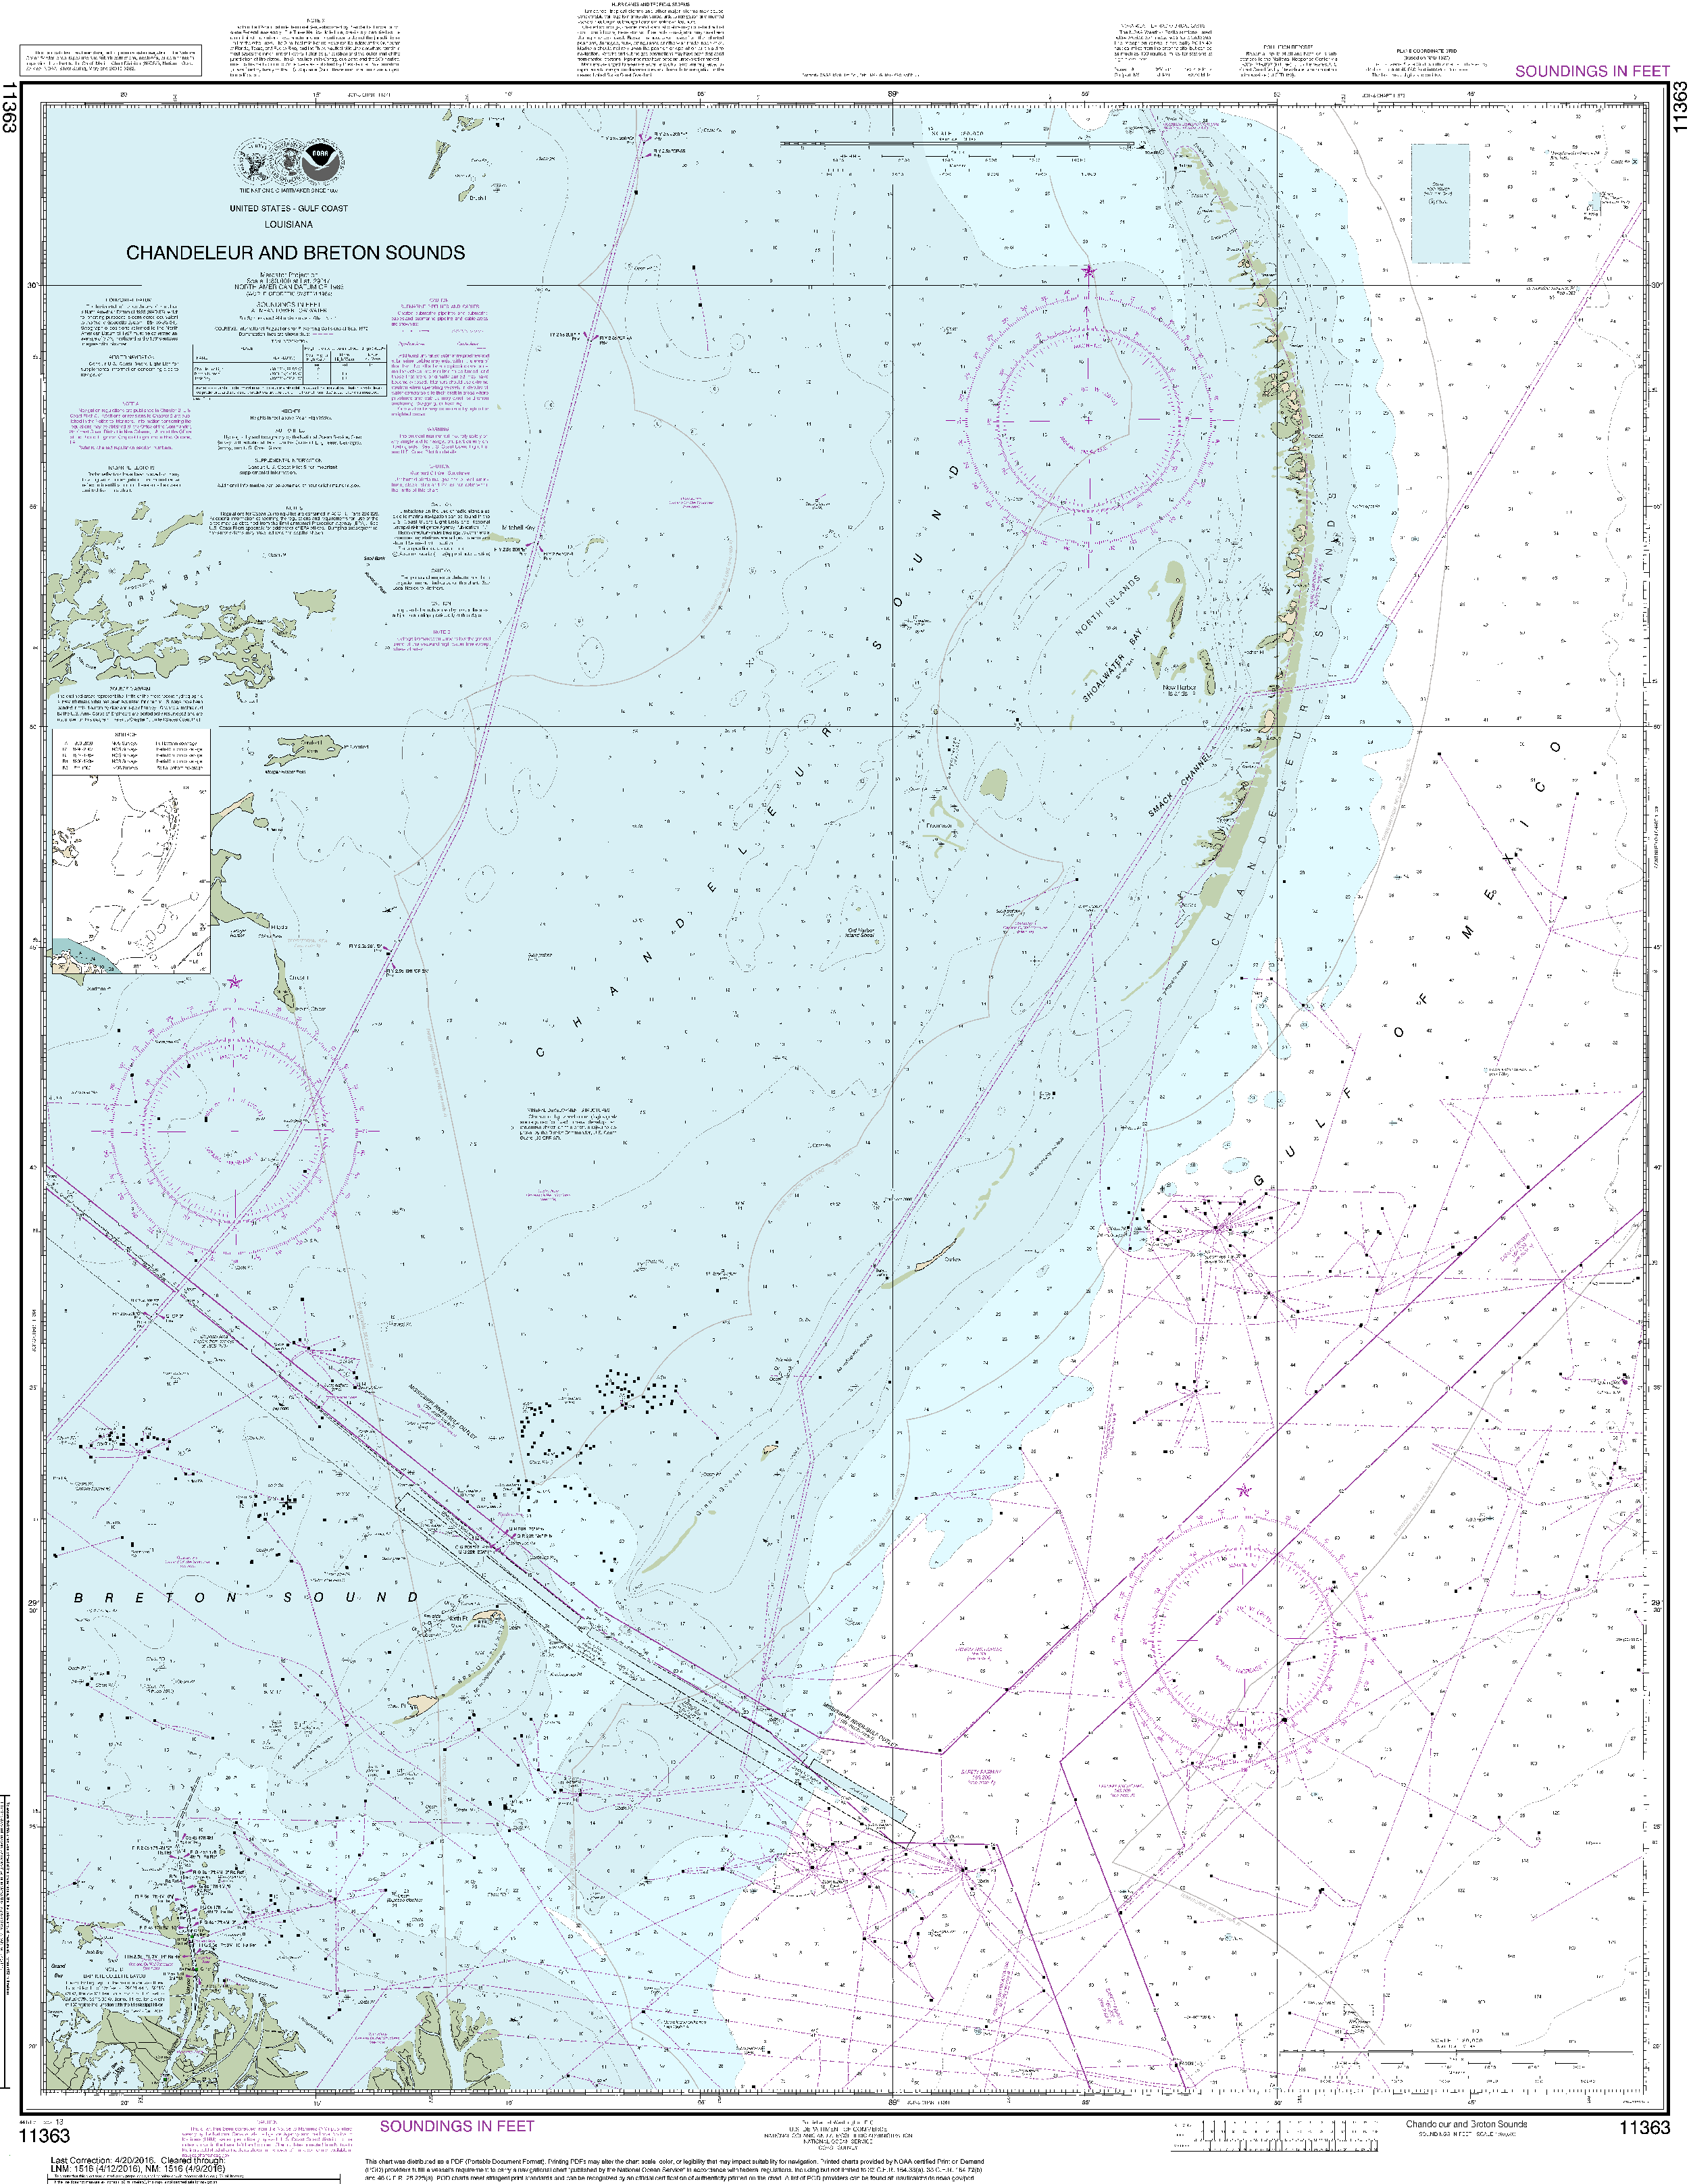 NOAA Nautical Chart 11363: Chandeleur and Breton Sounds